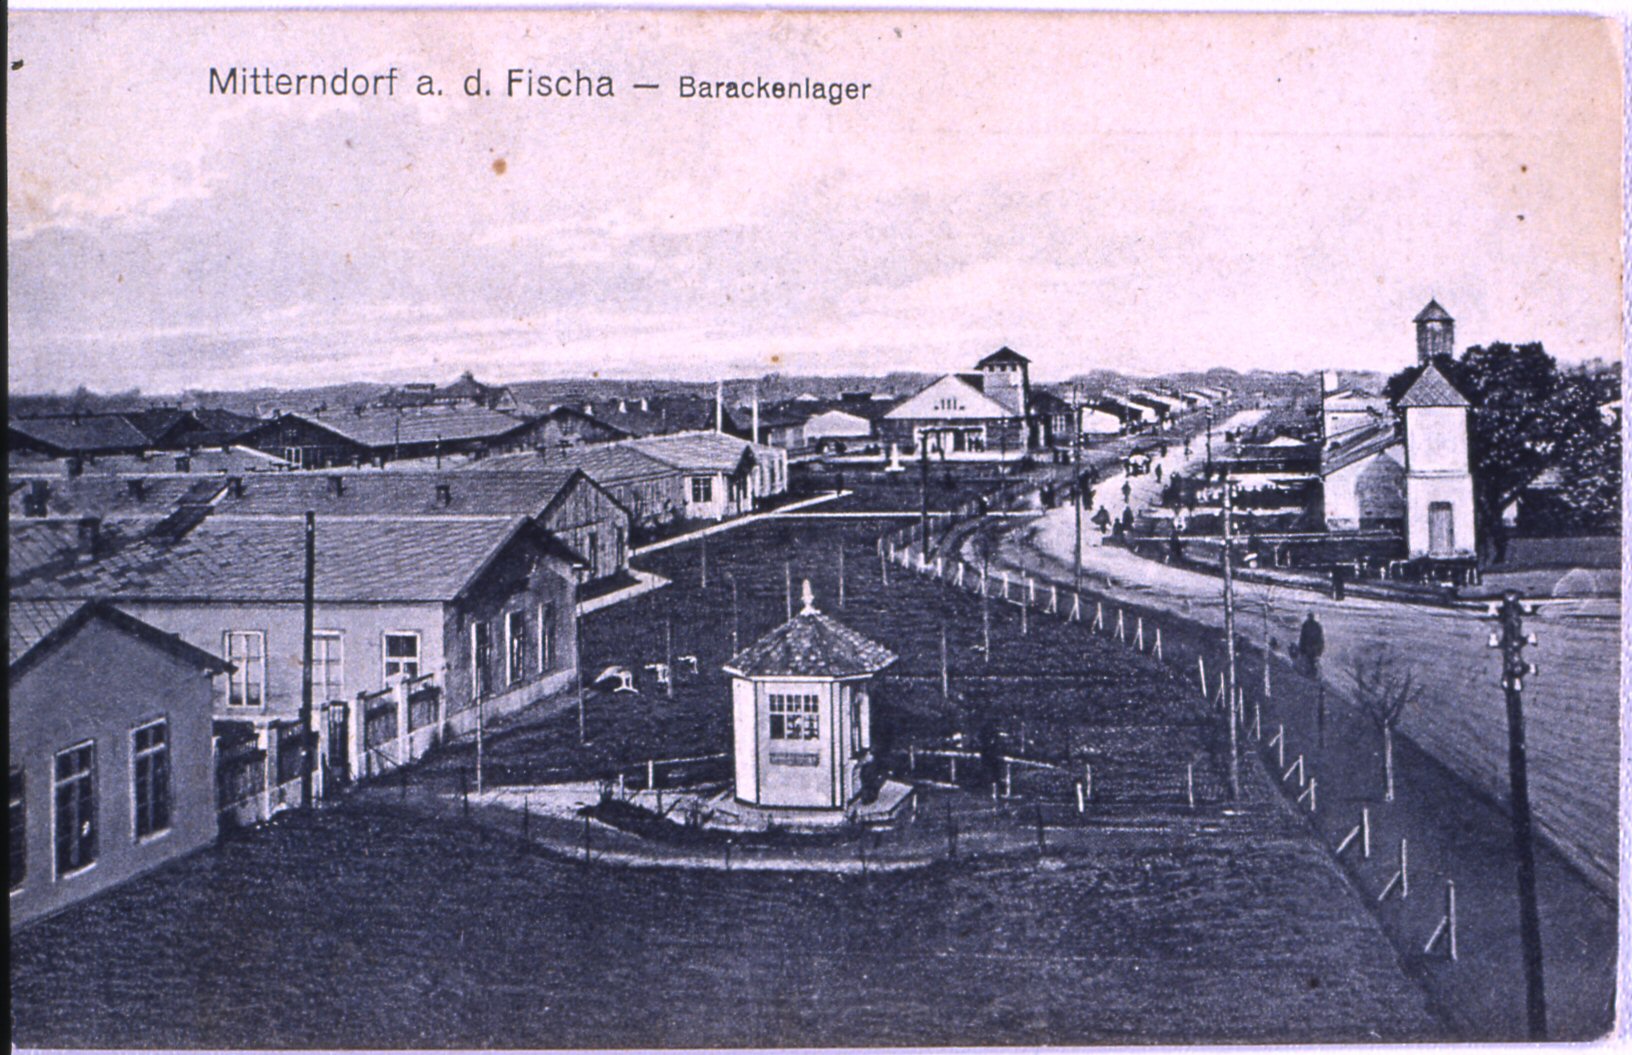 campo profughi Mitterndorf i guerra mondiale